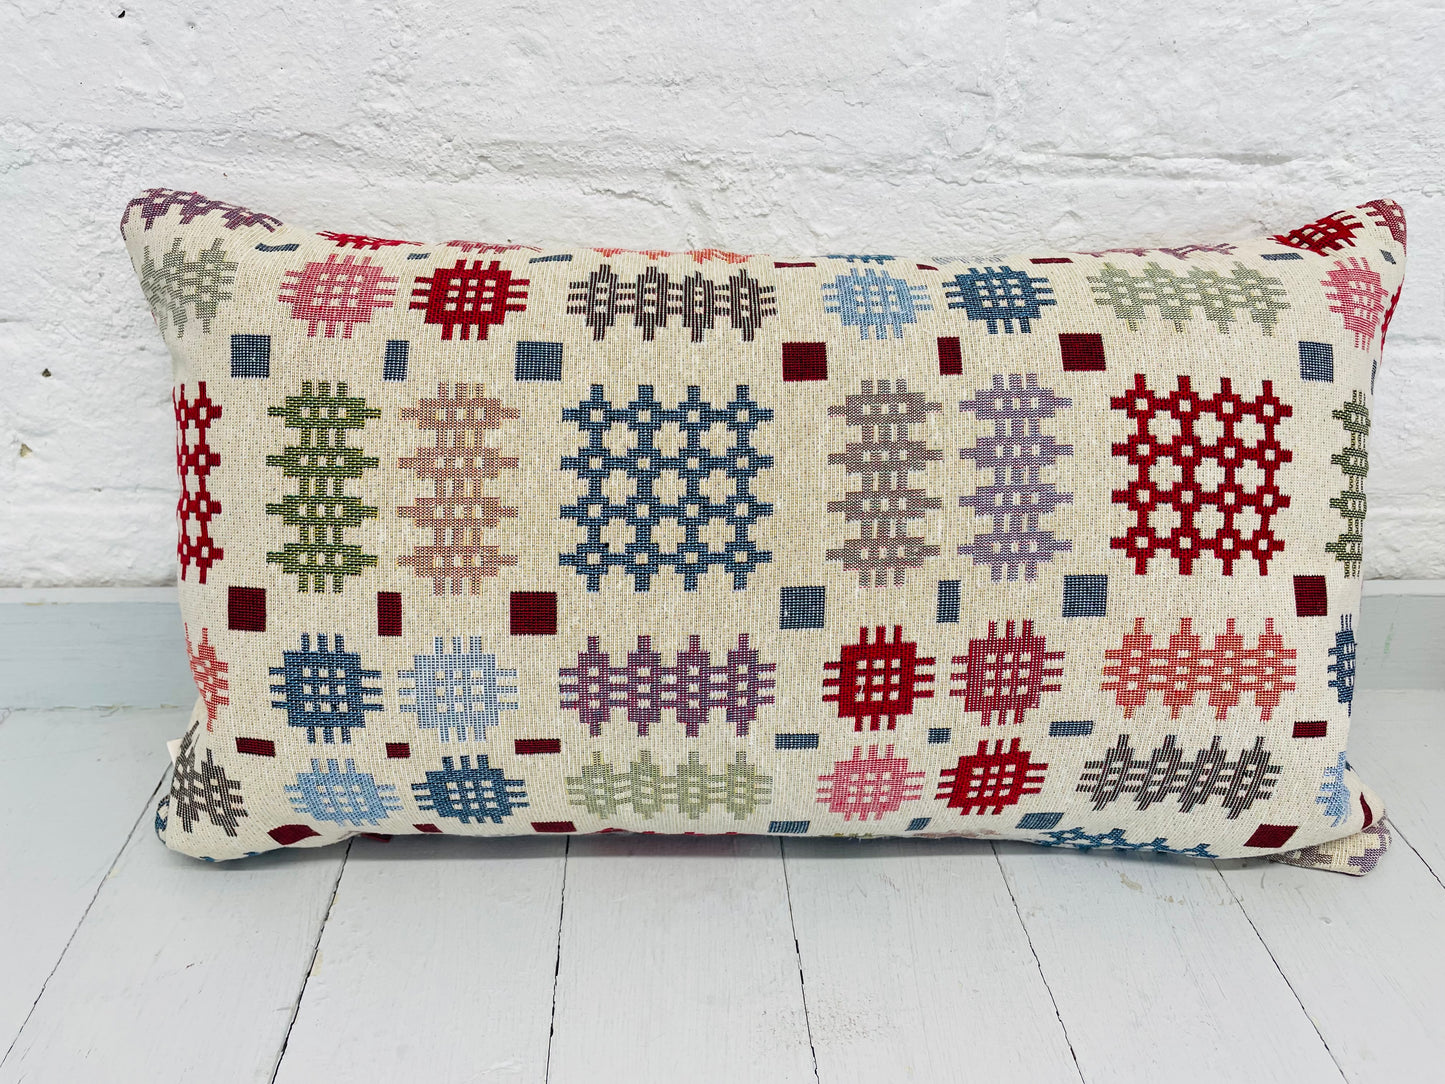 Welsh Blanket style Cushion- Cariad Rectangle   Cushion